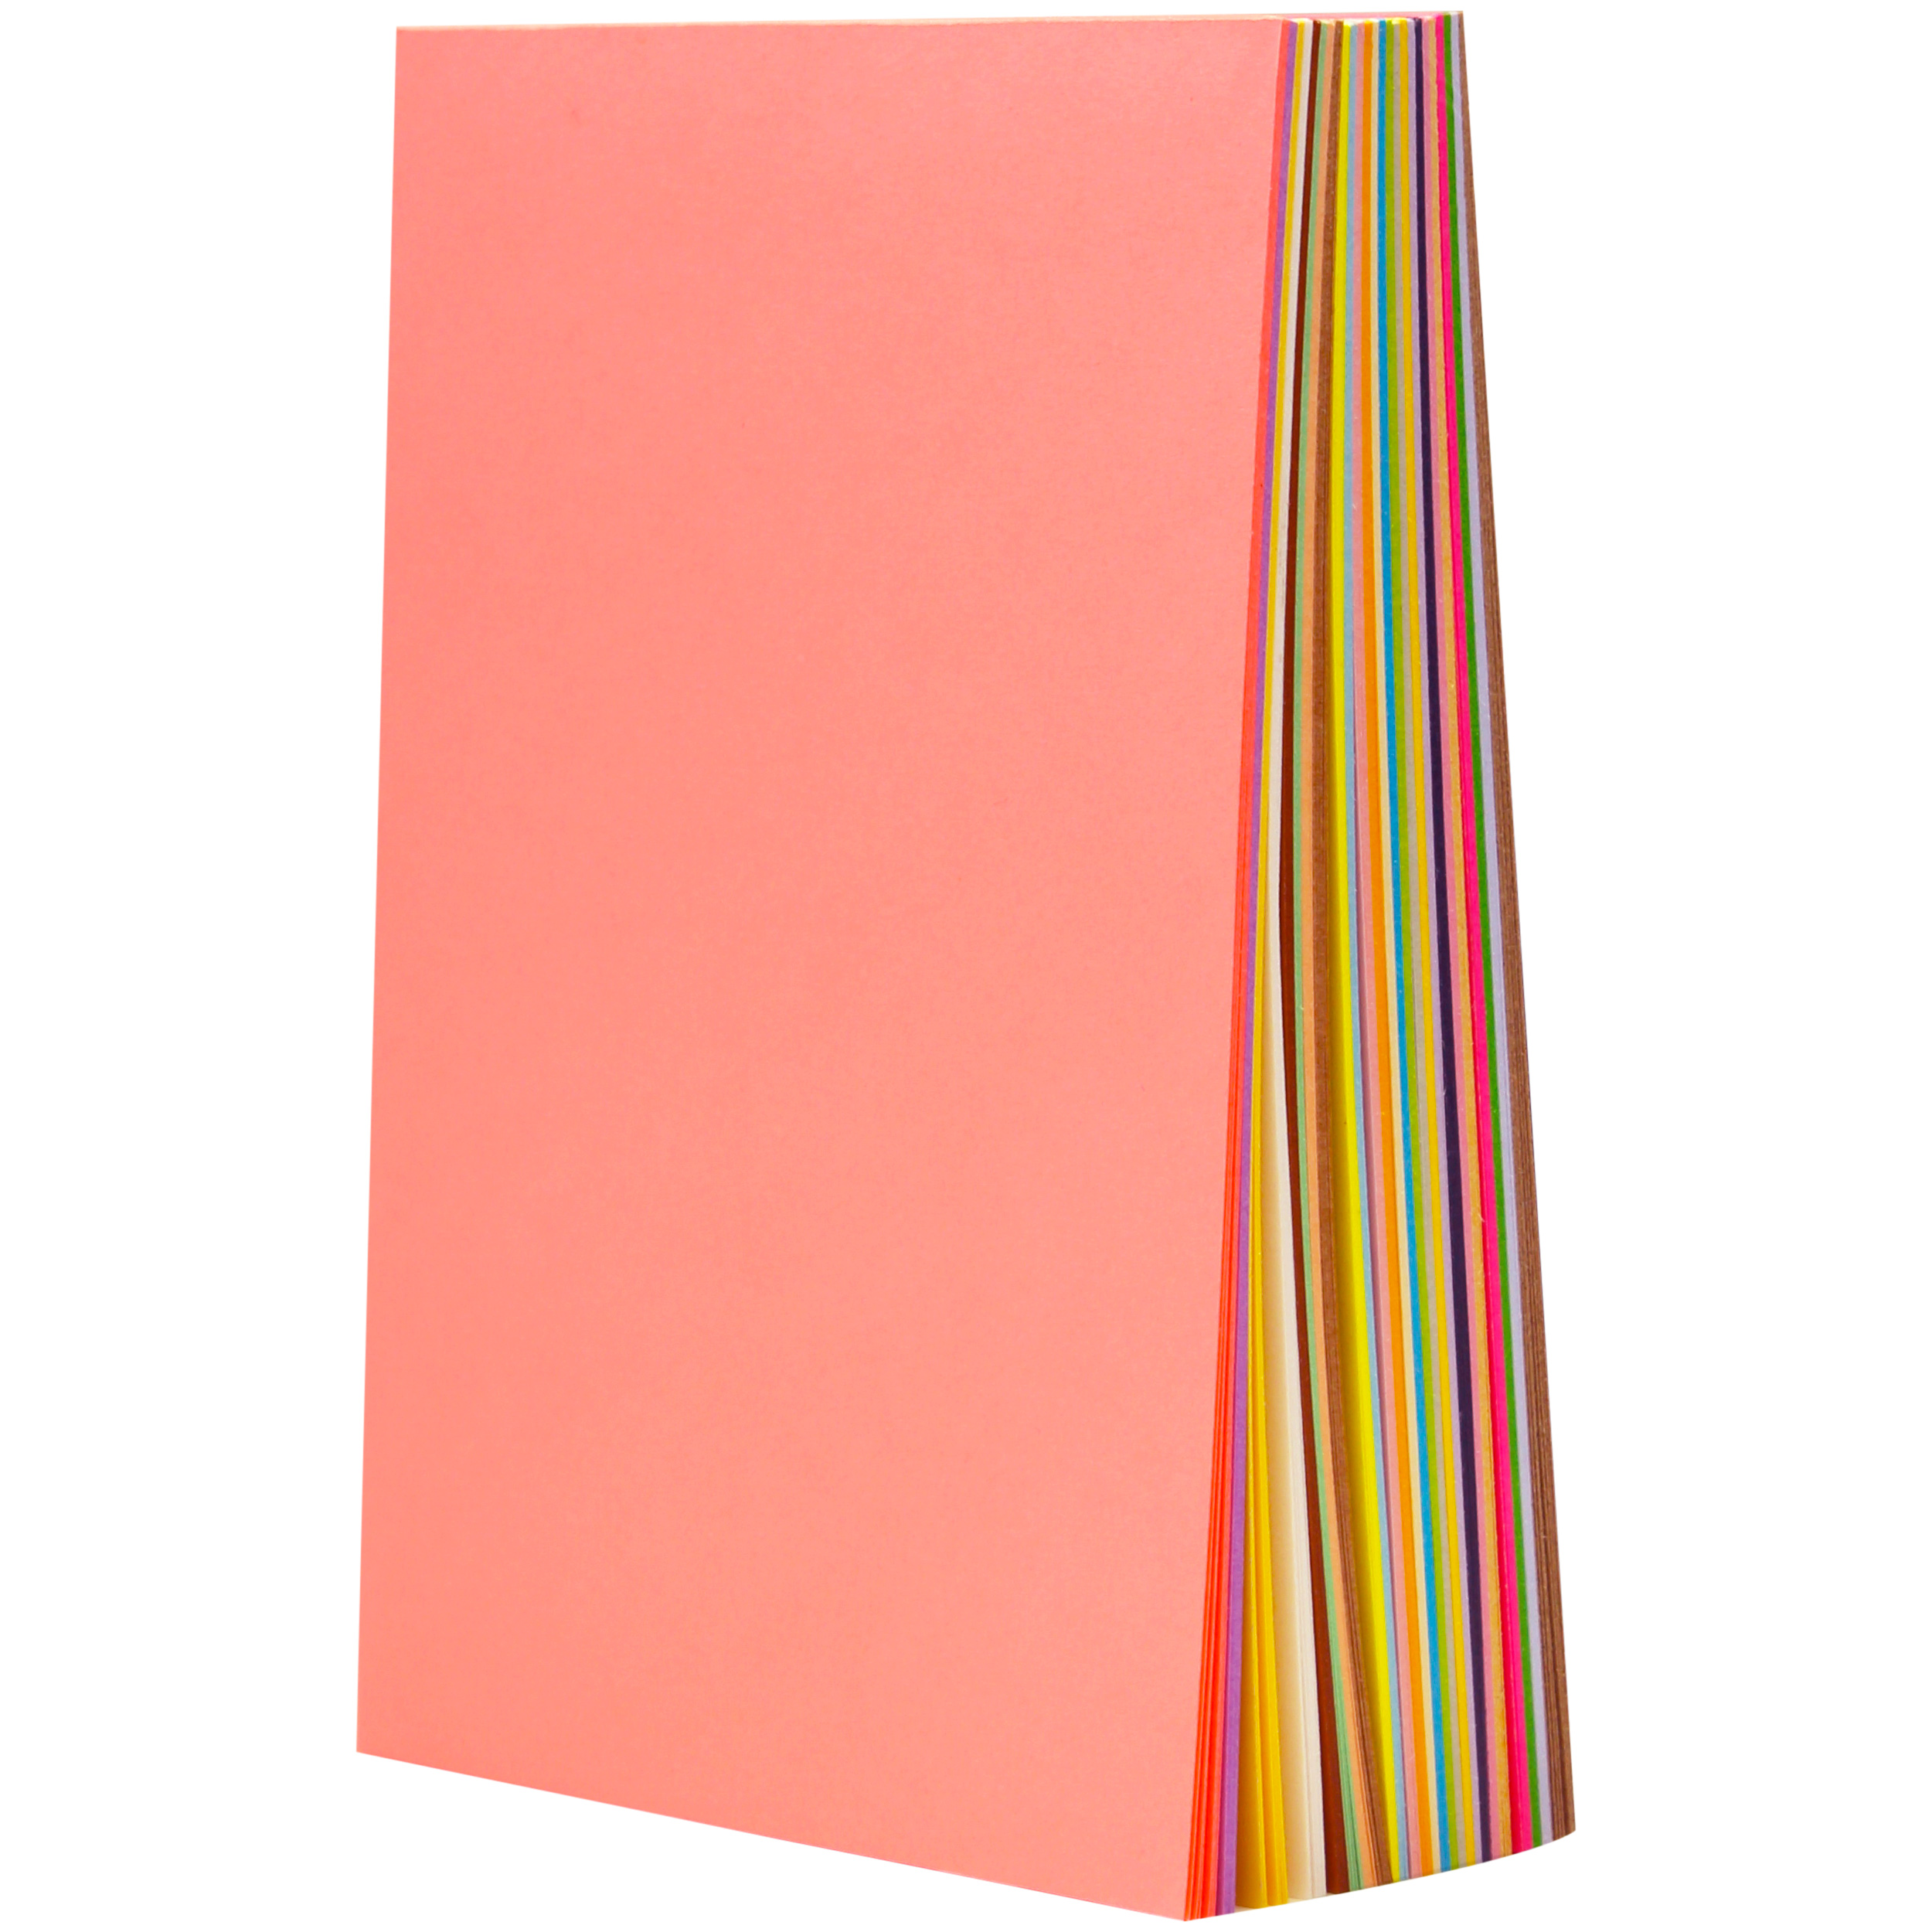 کاغذ رنگی A6 انتشارات سیبان طرح رنگارنگ بسته 200 عددی